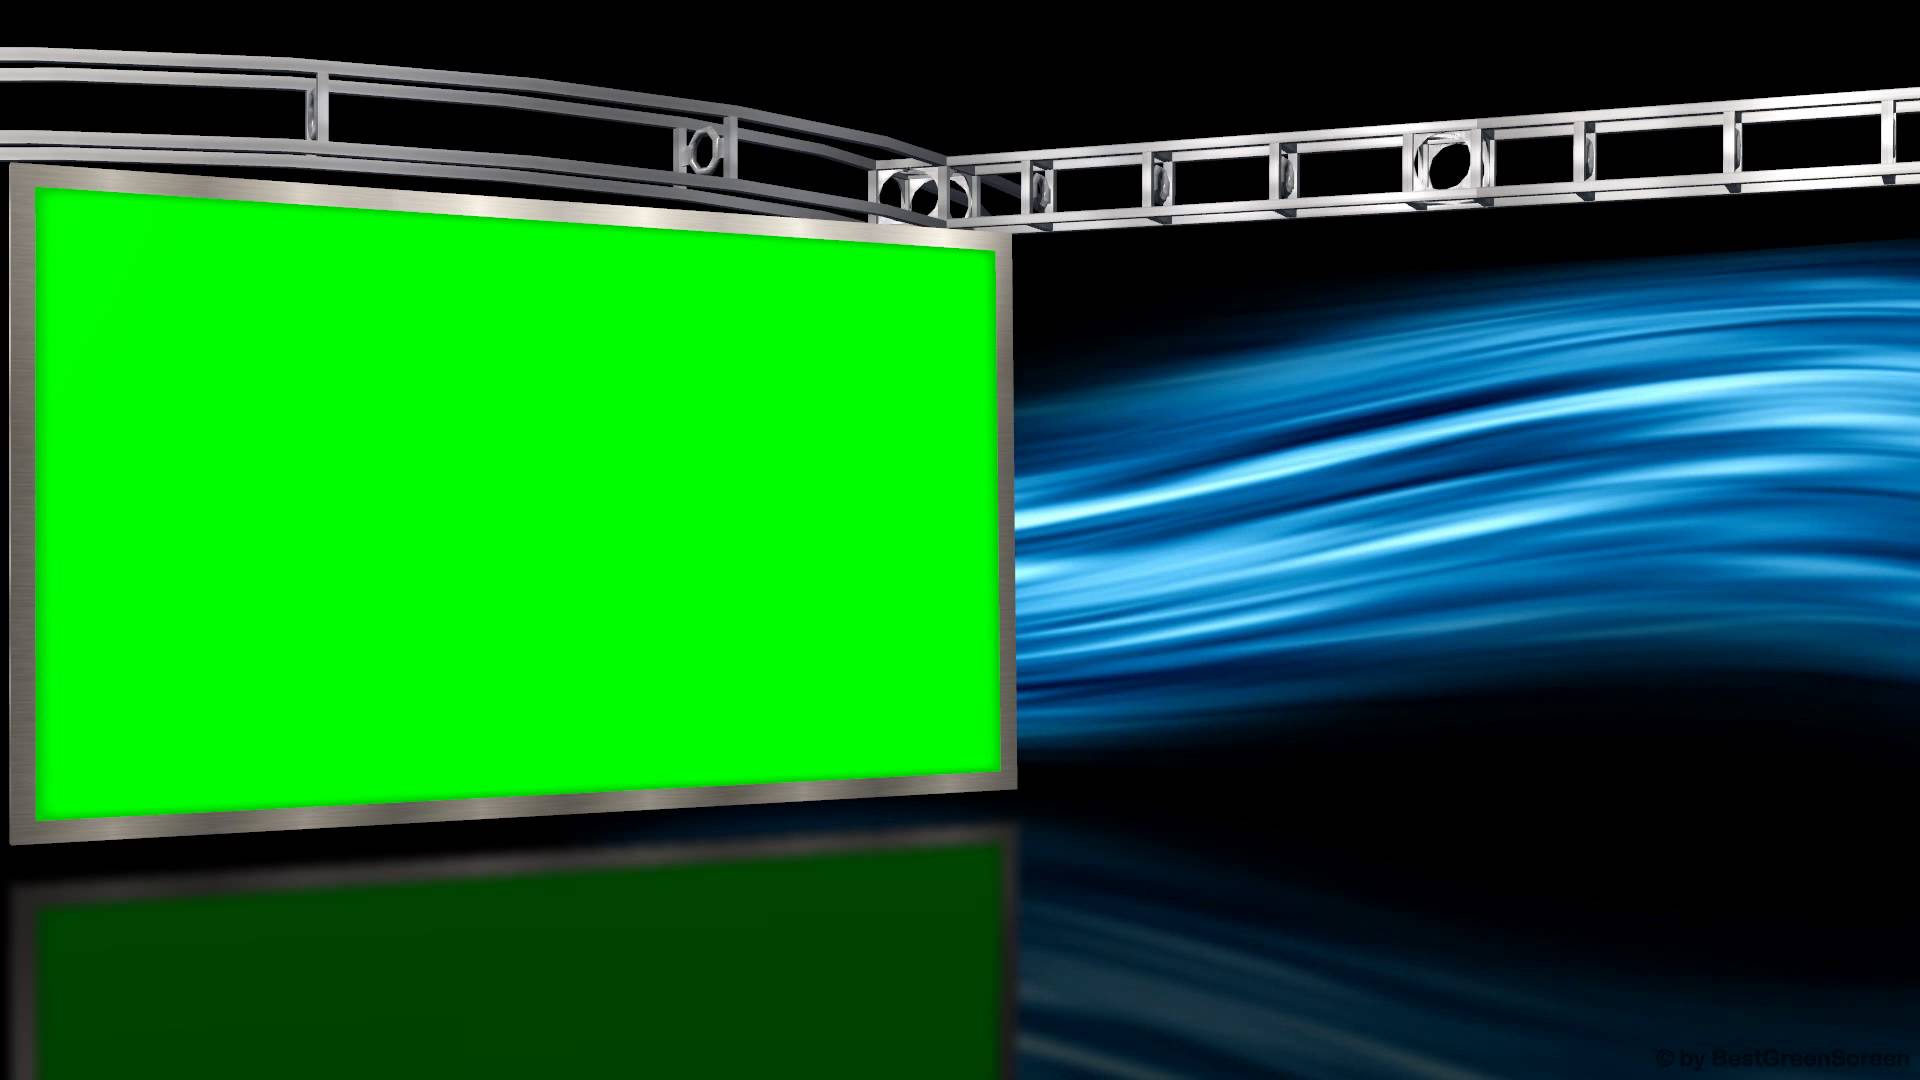 grren screen images green screen video backgrounds free download